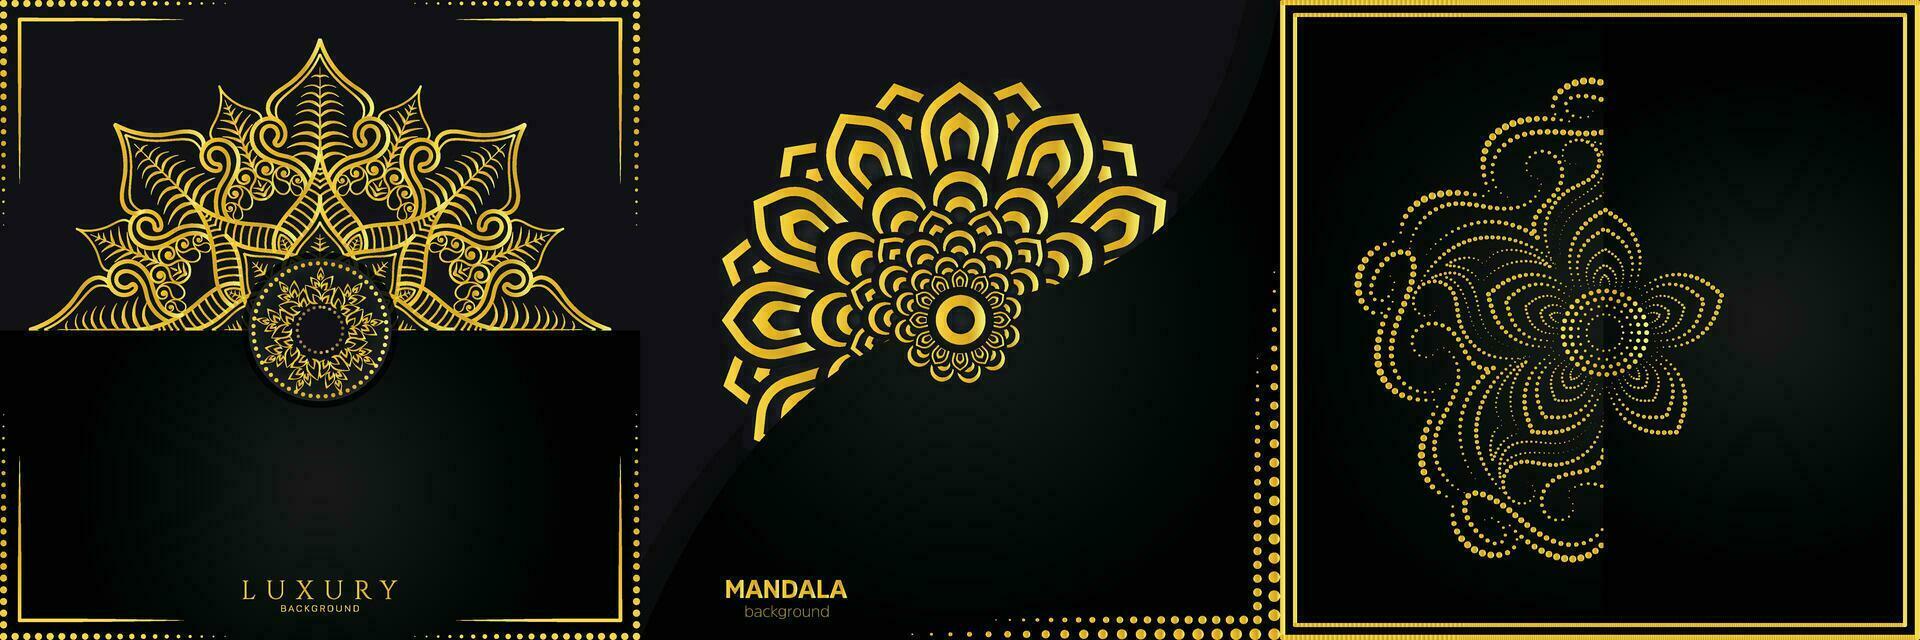 Zier Luxus Mandala Muster 3 im 1 Design. vektor